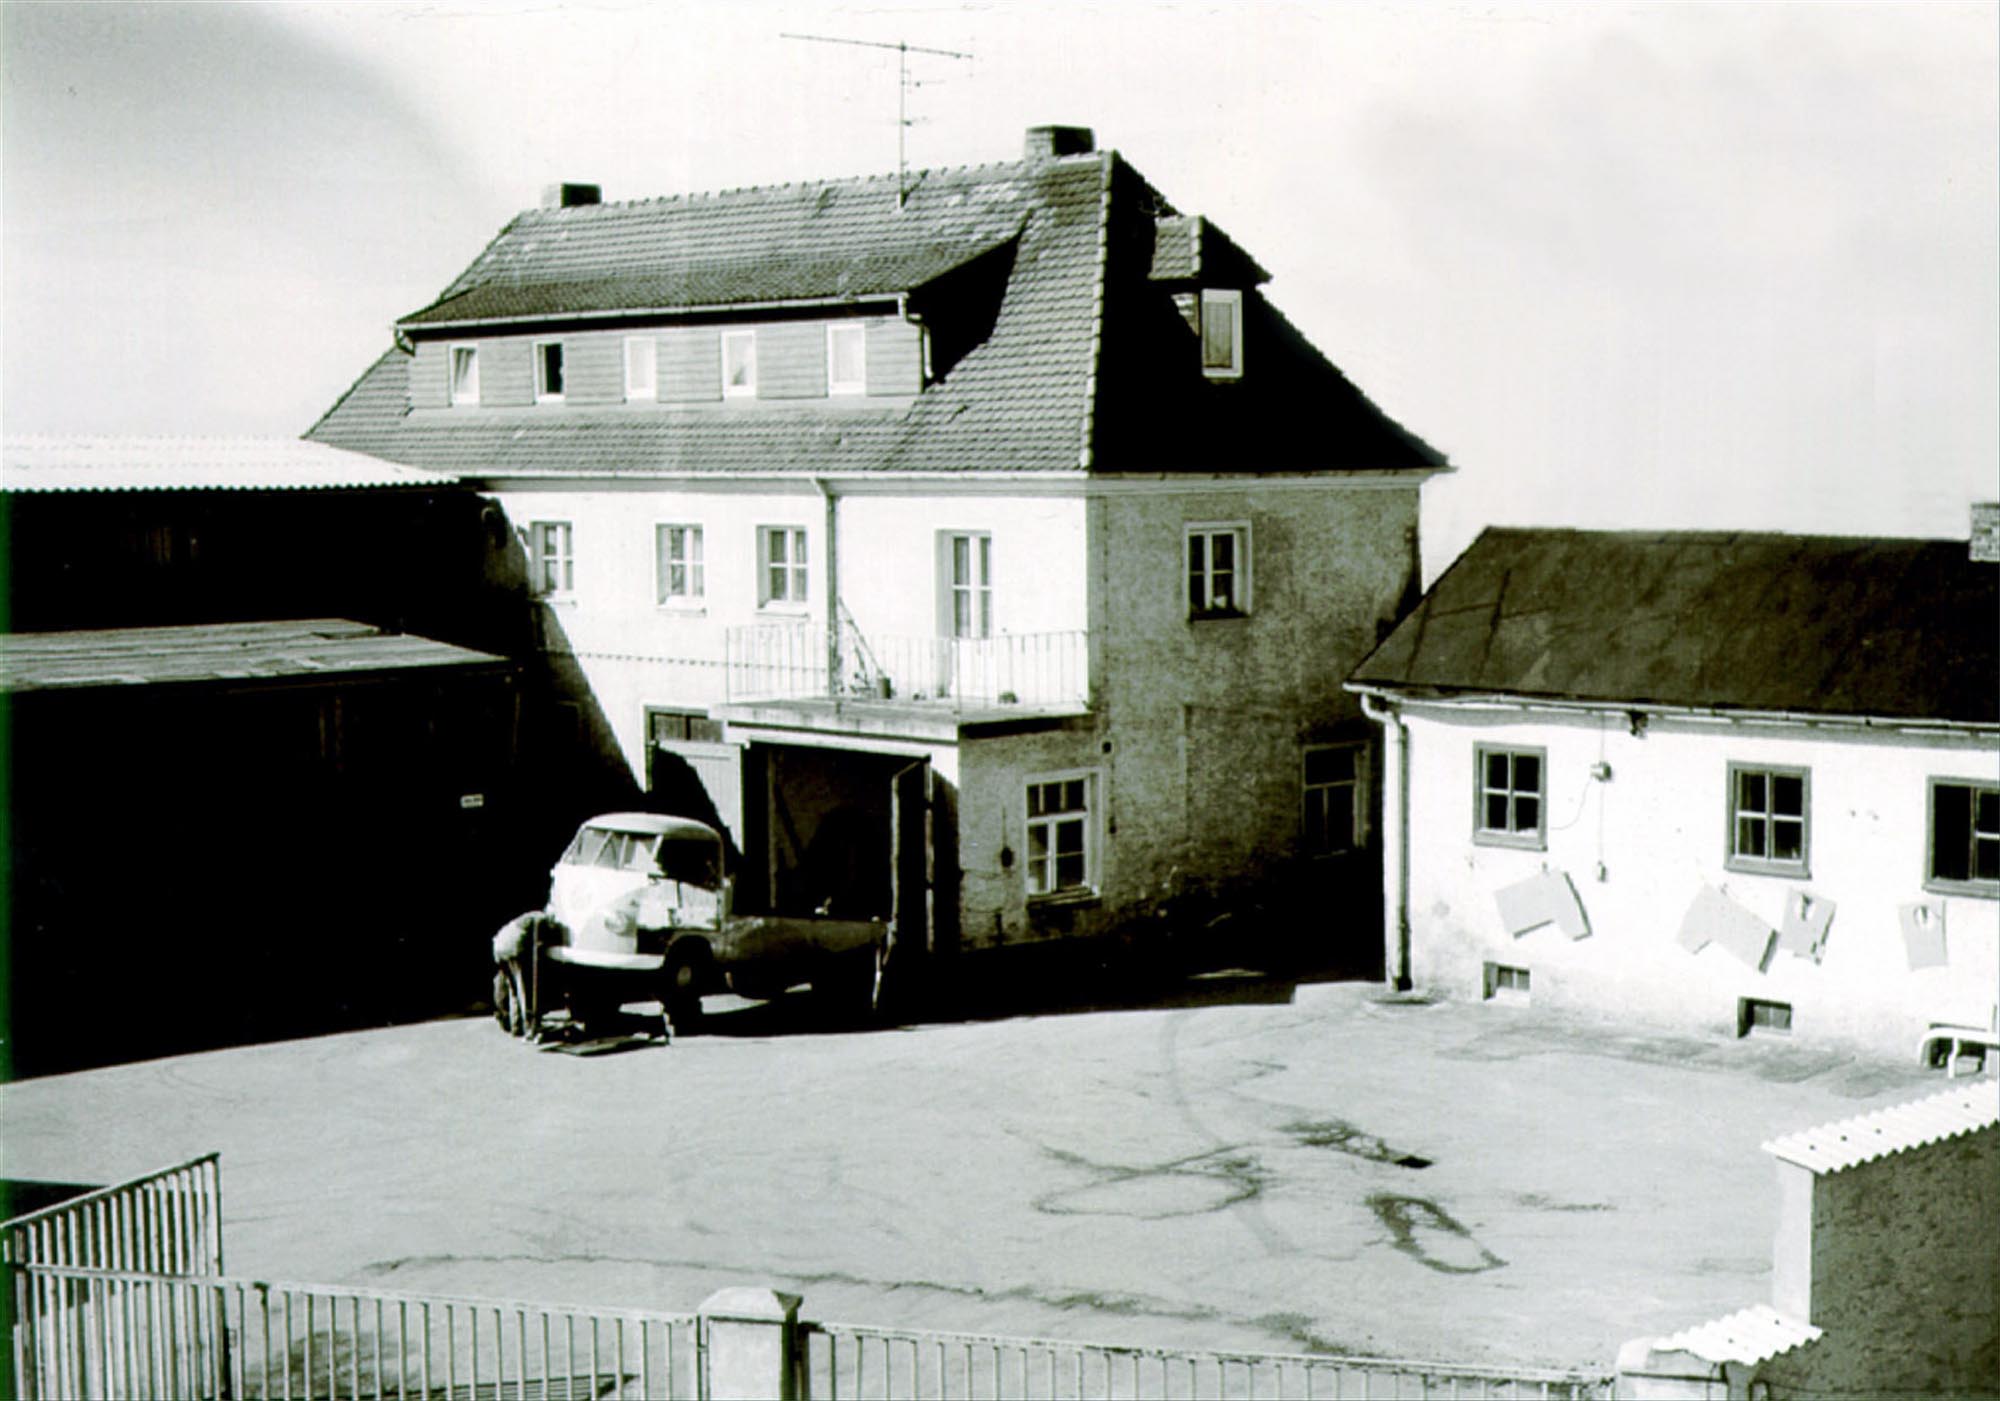 Workshop in 1960